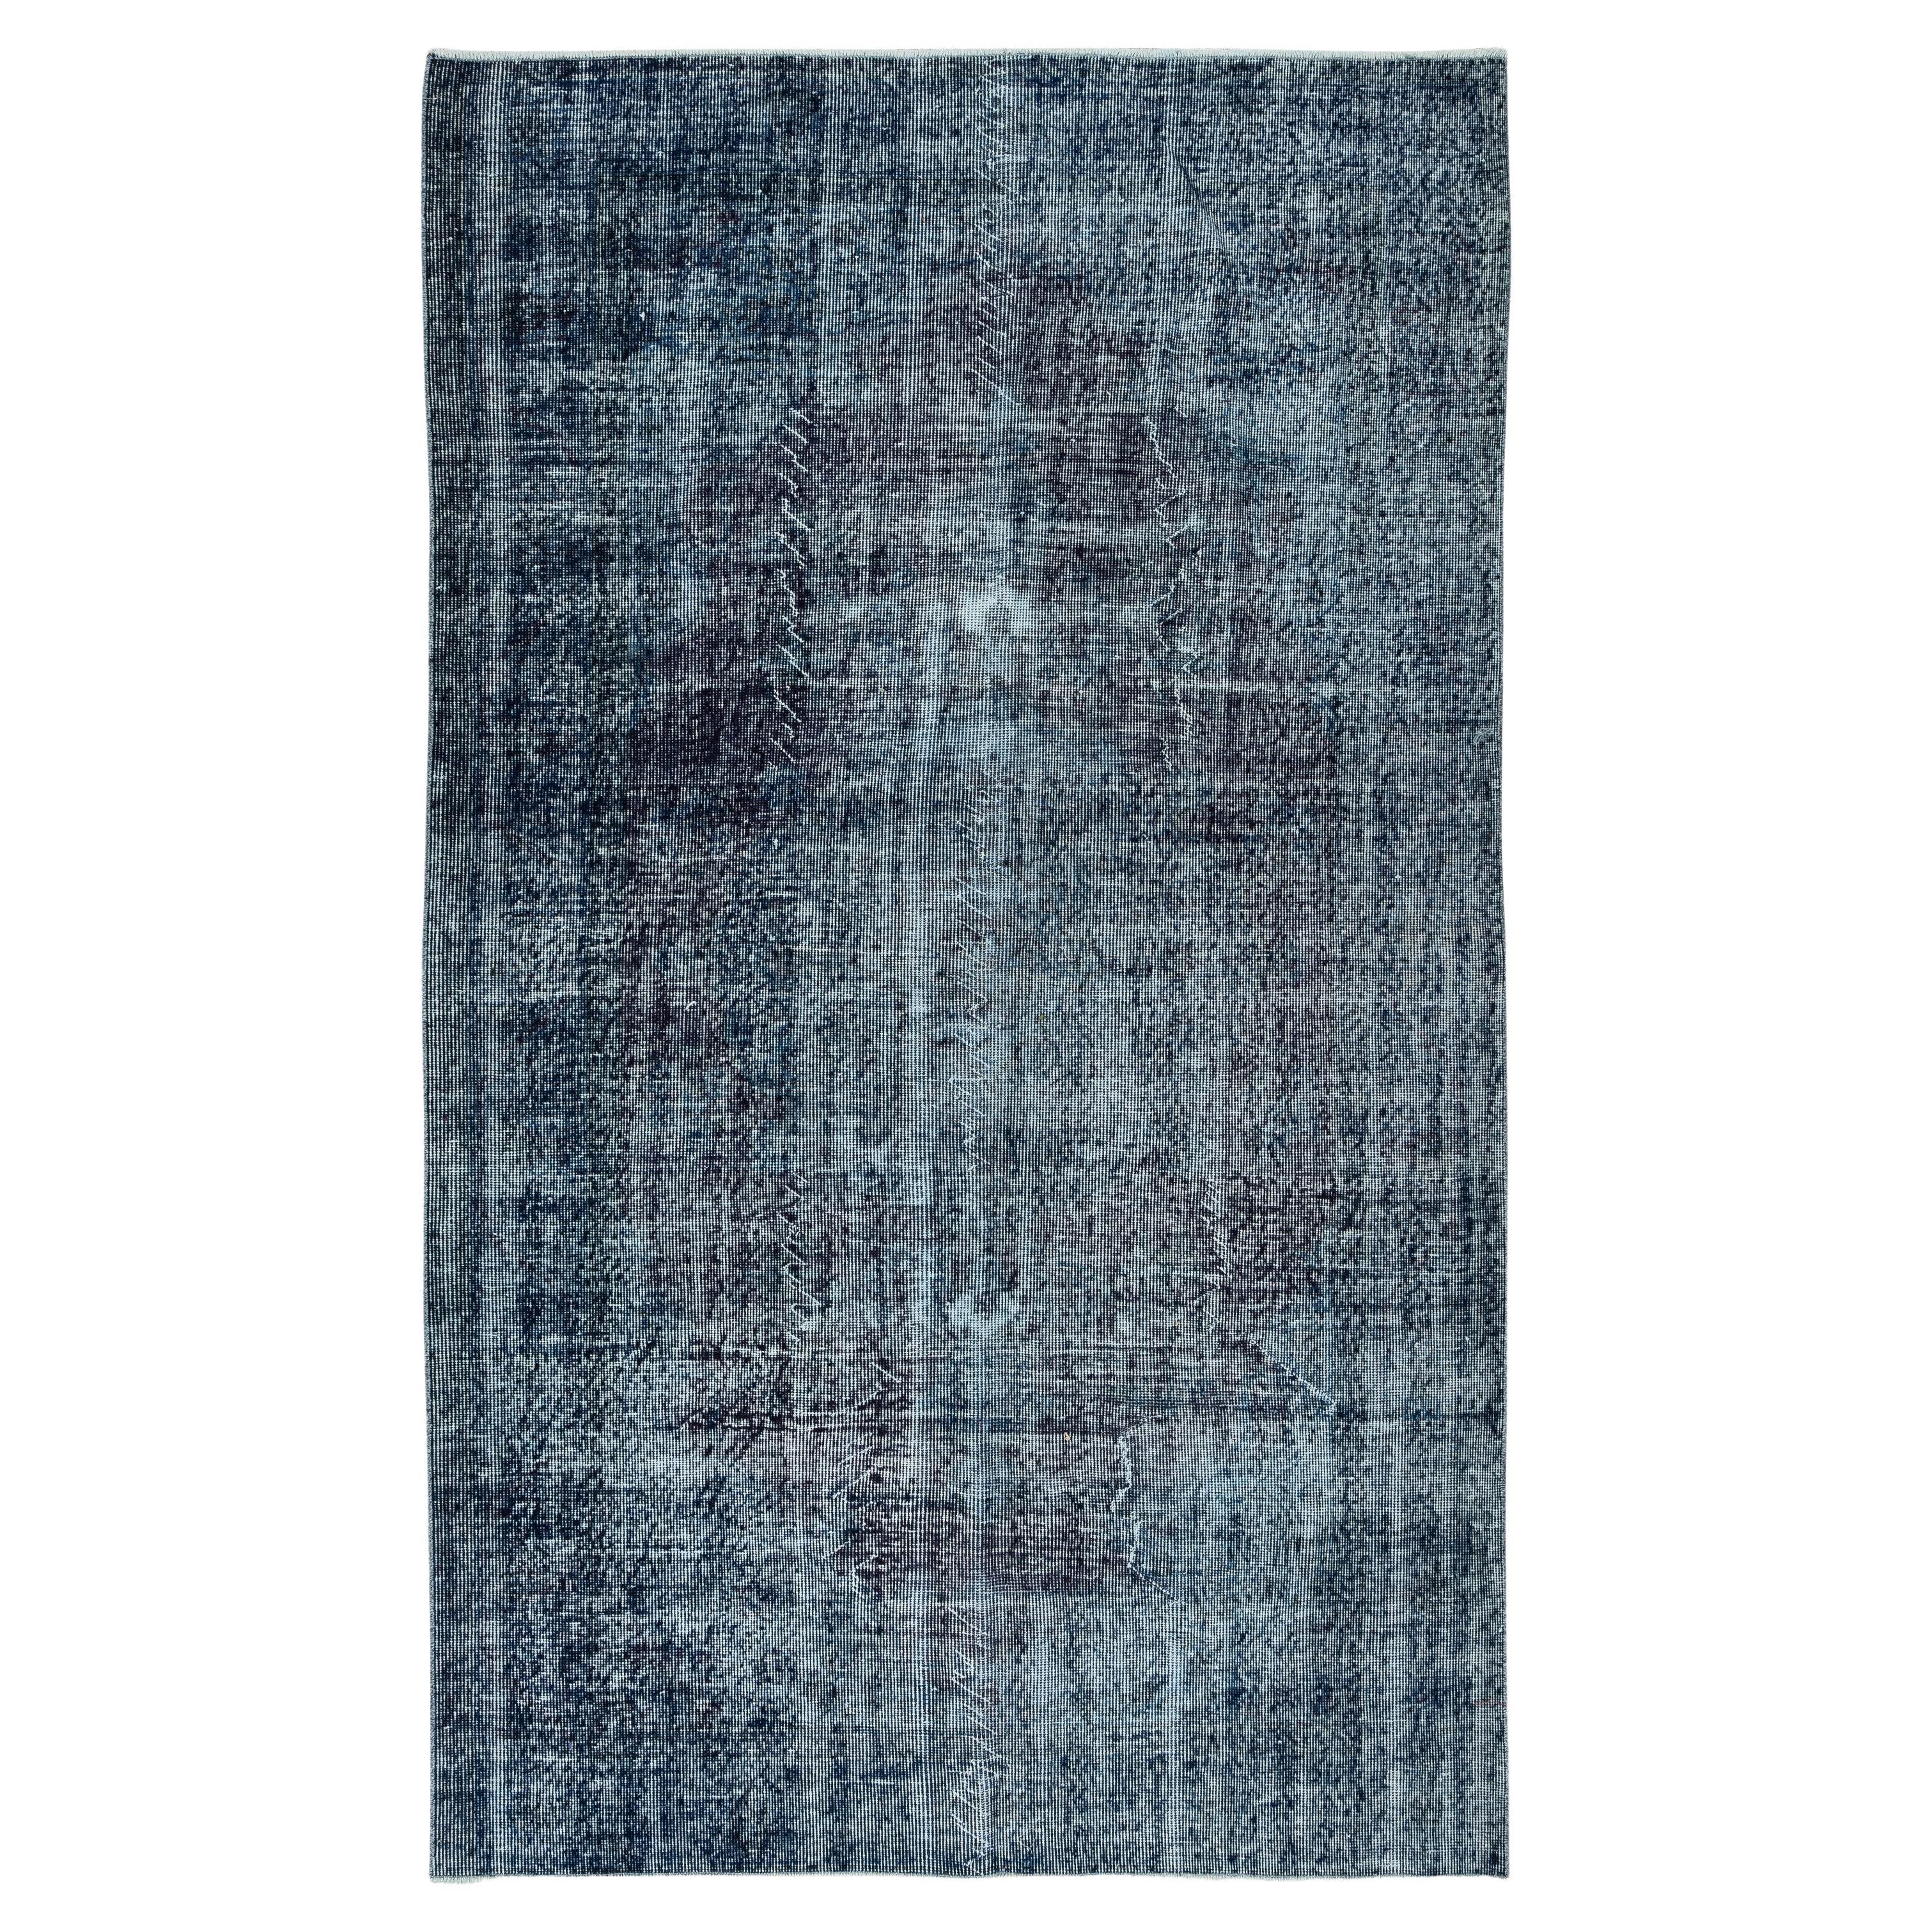 5.4x9 Ft Modern Handmade Area Rug, Vintage Turkish Wool Carpet in Navy Blue